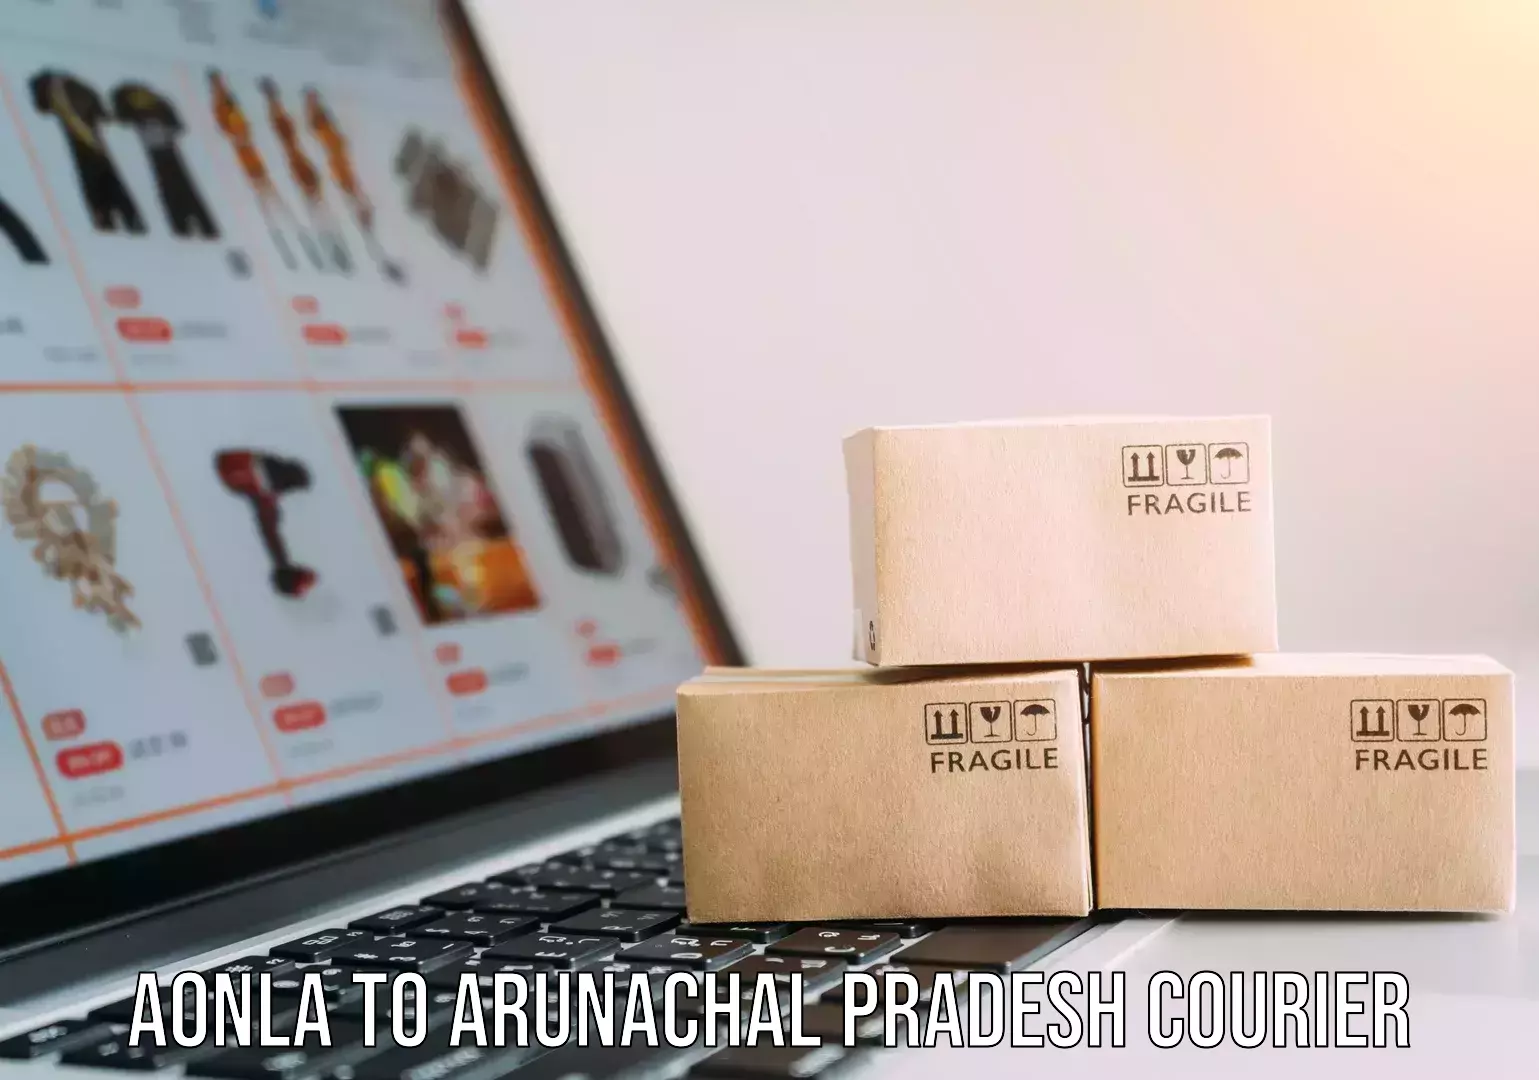 Express delivery network Aonla to Arunachal Pradesh